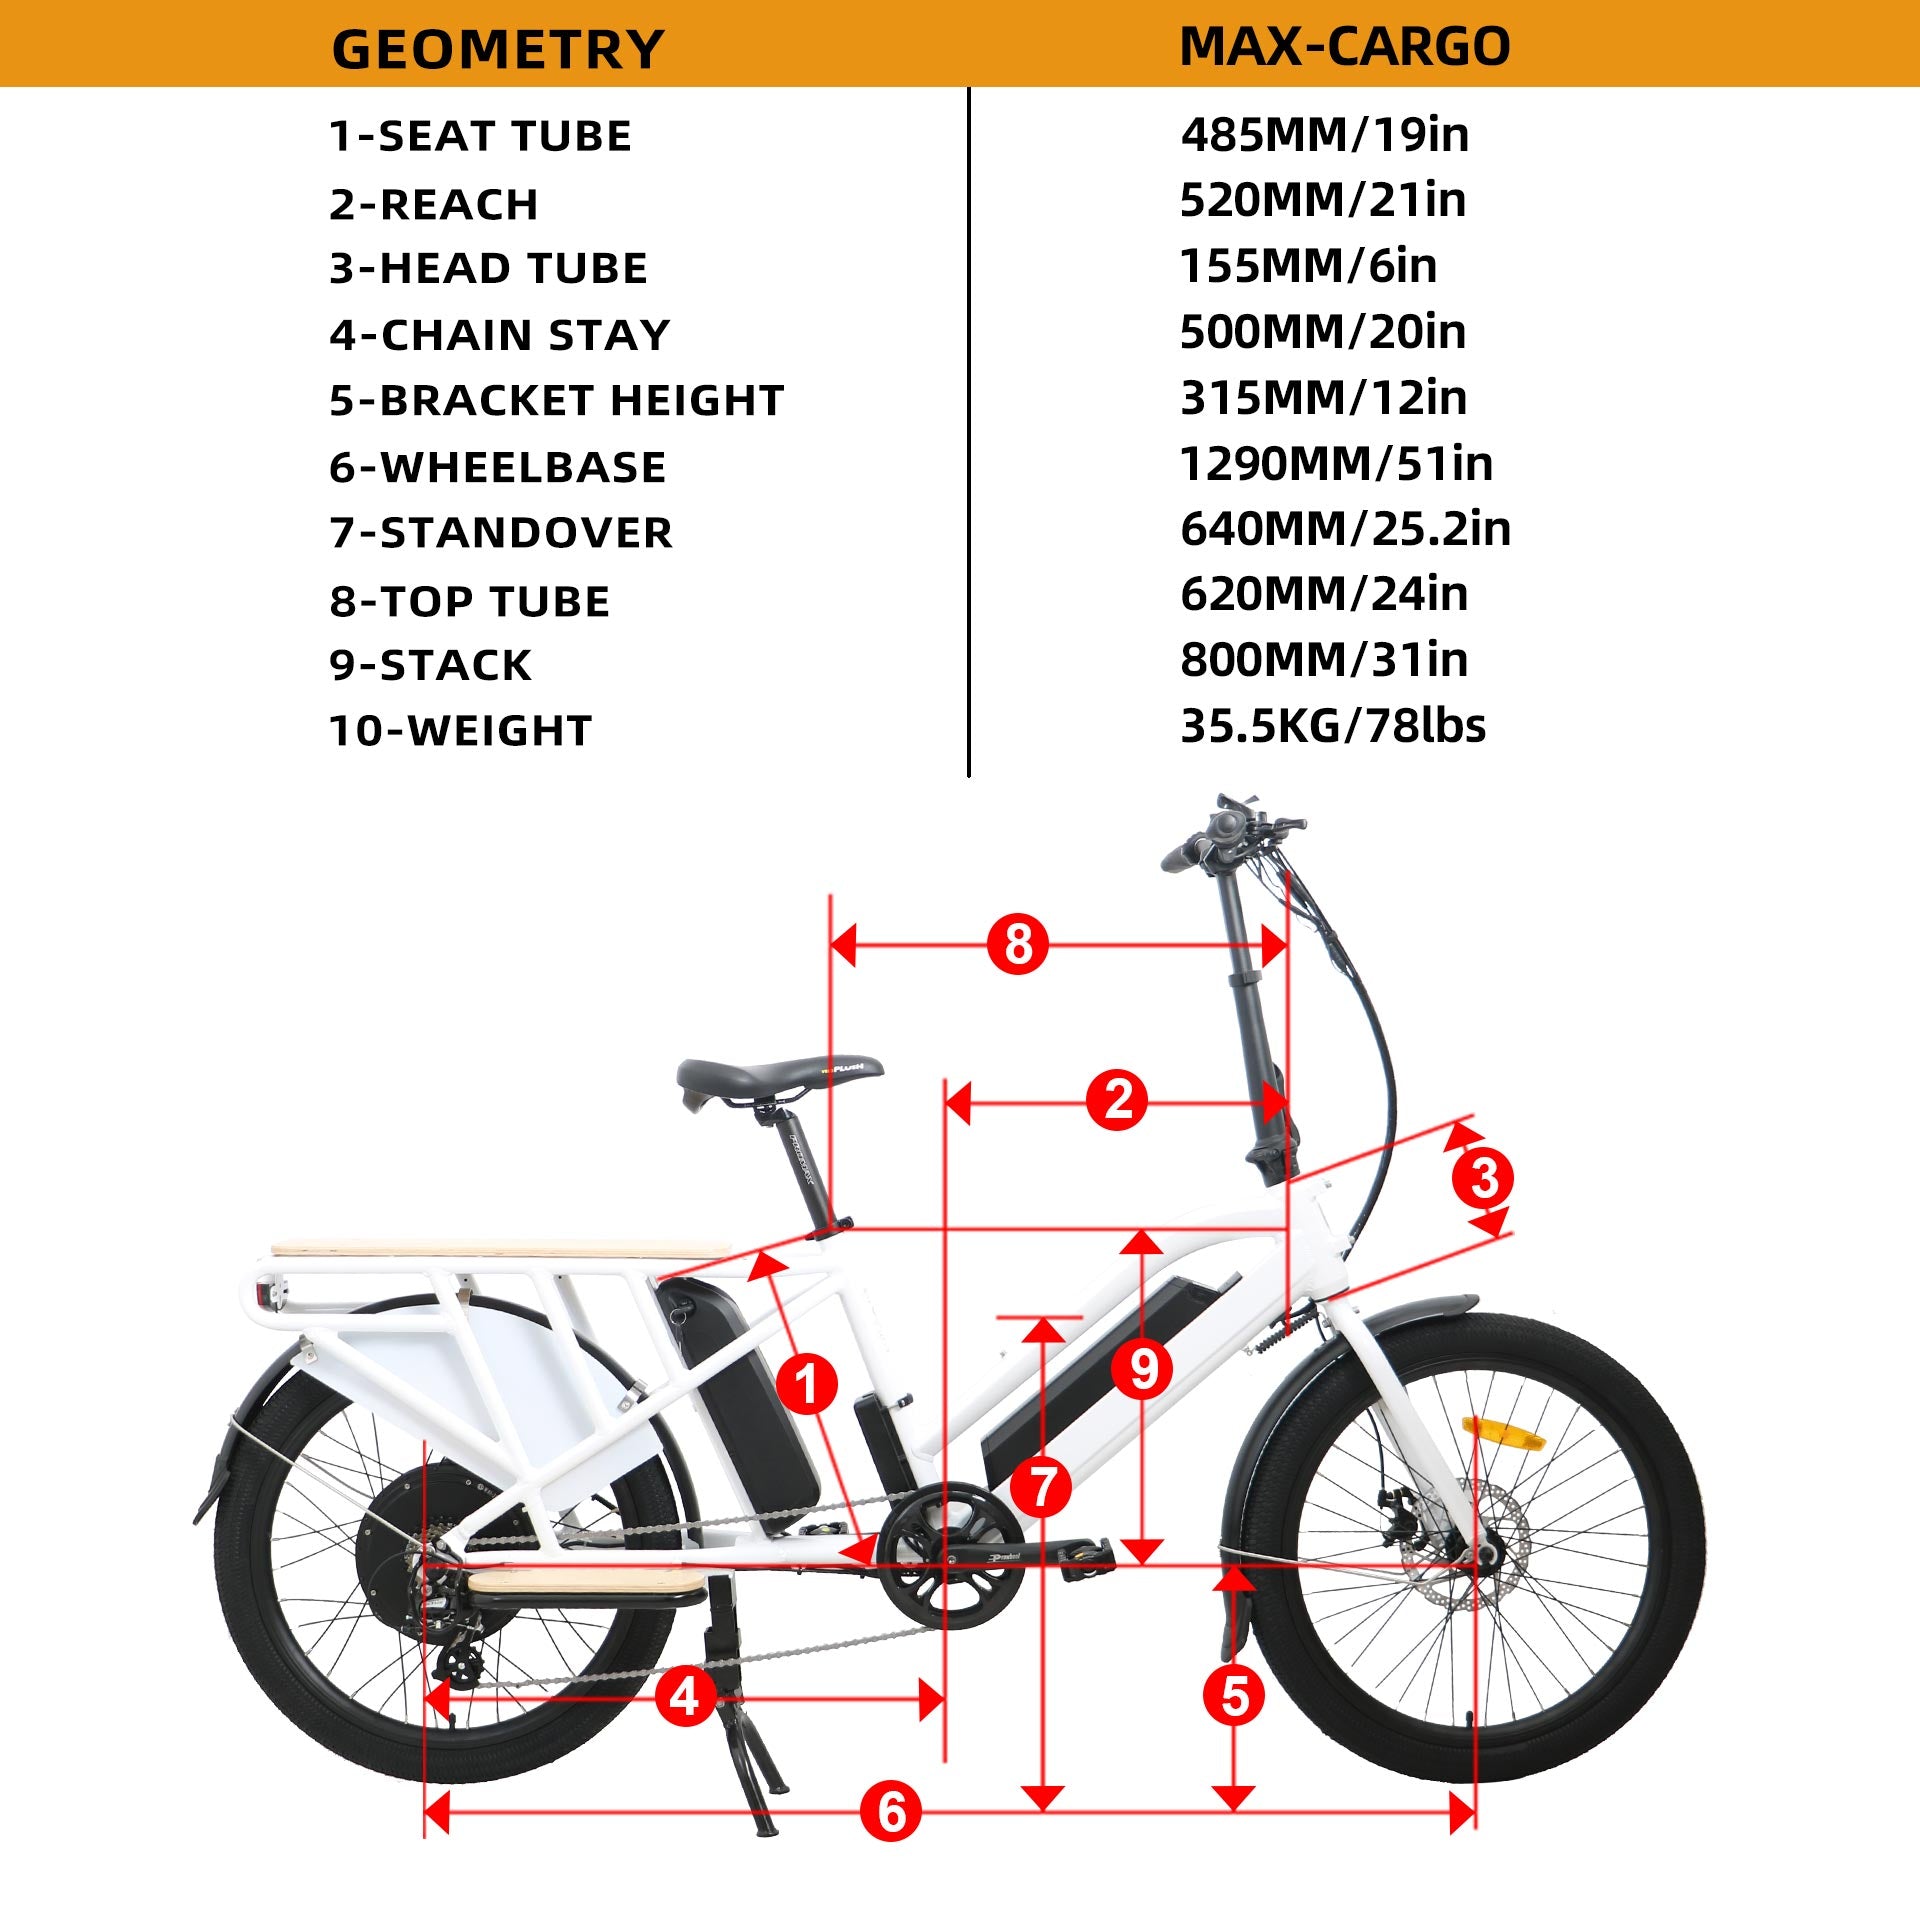 Moped style E-bike Eunorau Max Cargo Geometry